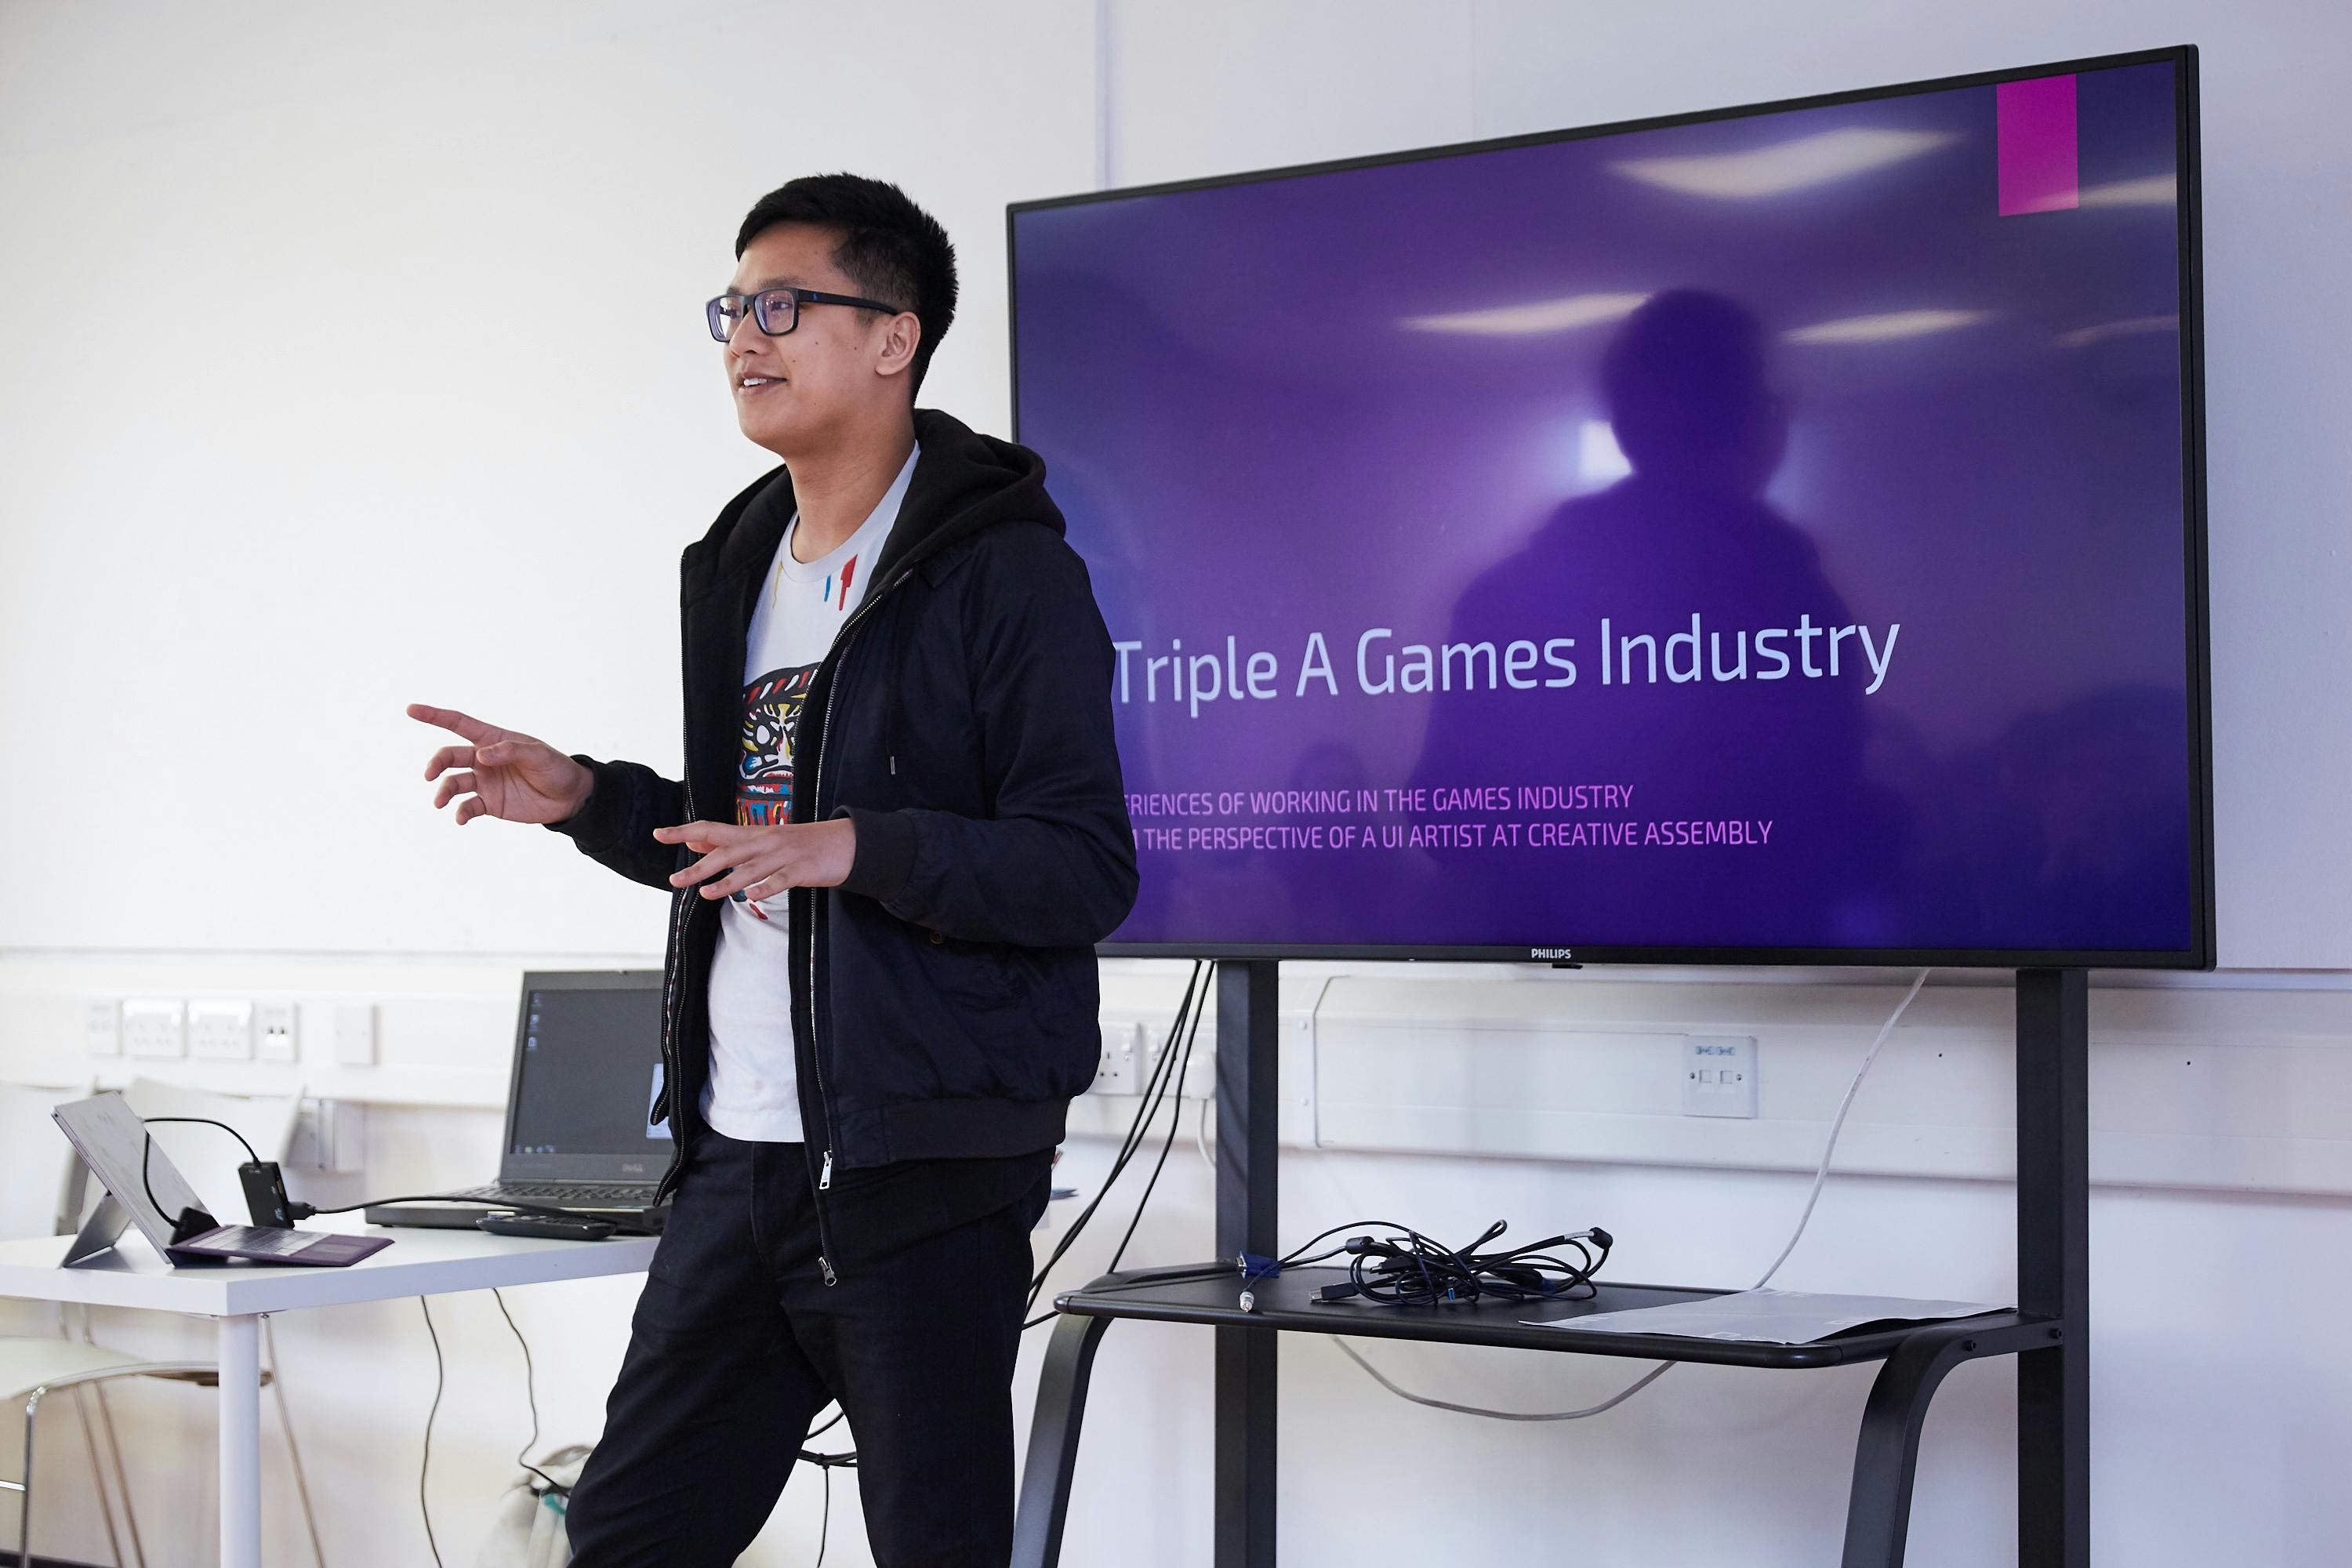 BA Hons Game Arts graduate Tim Nguyen